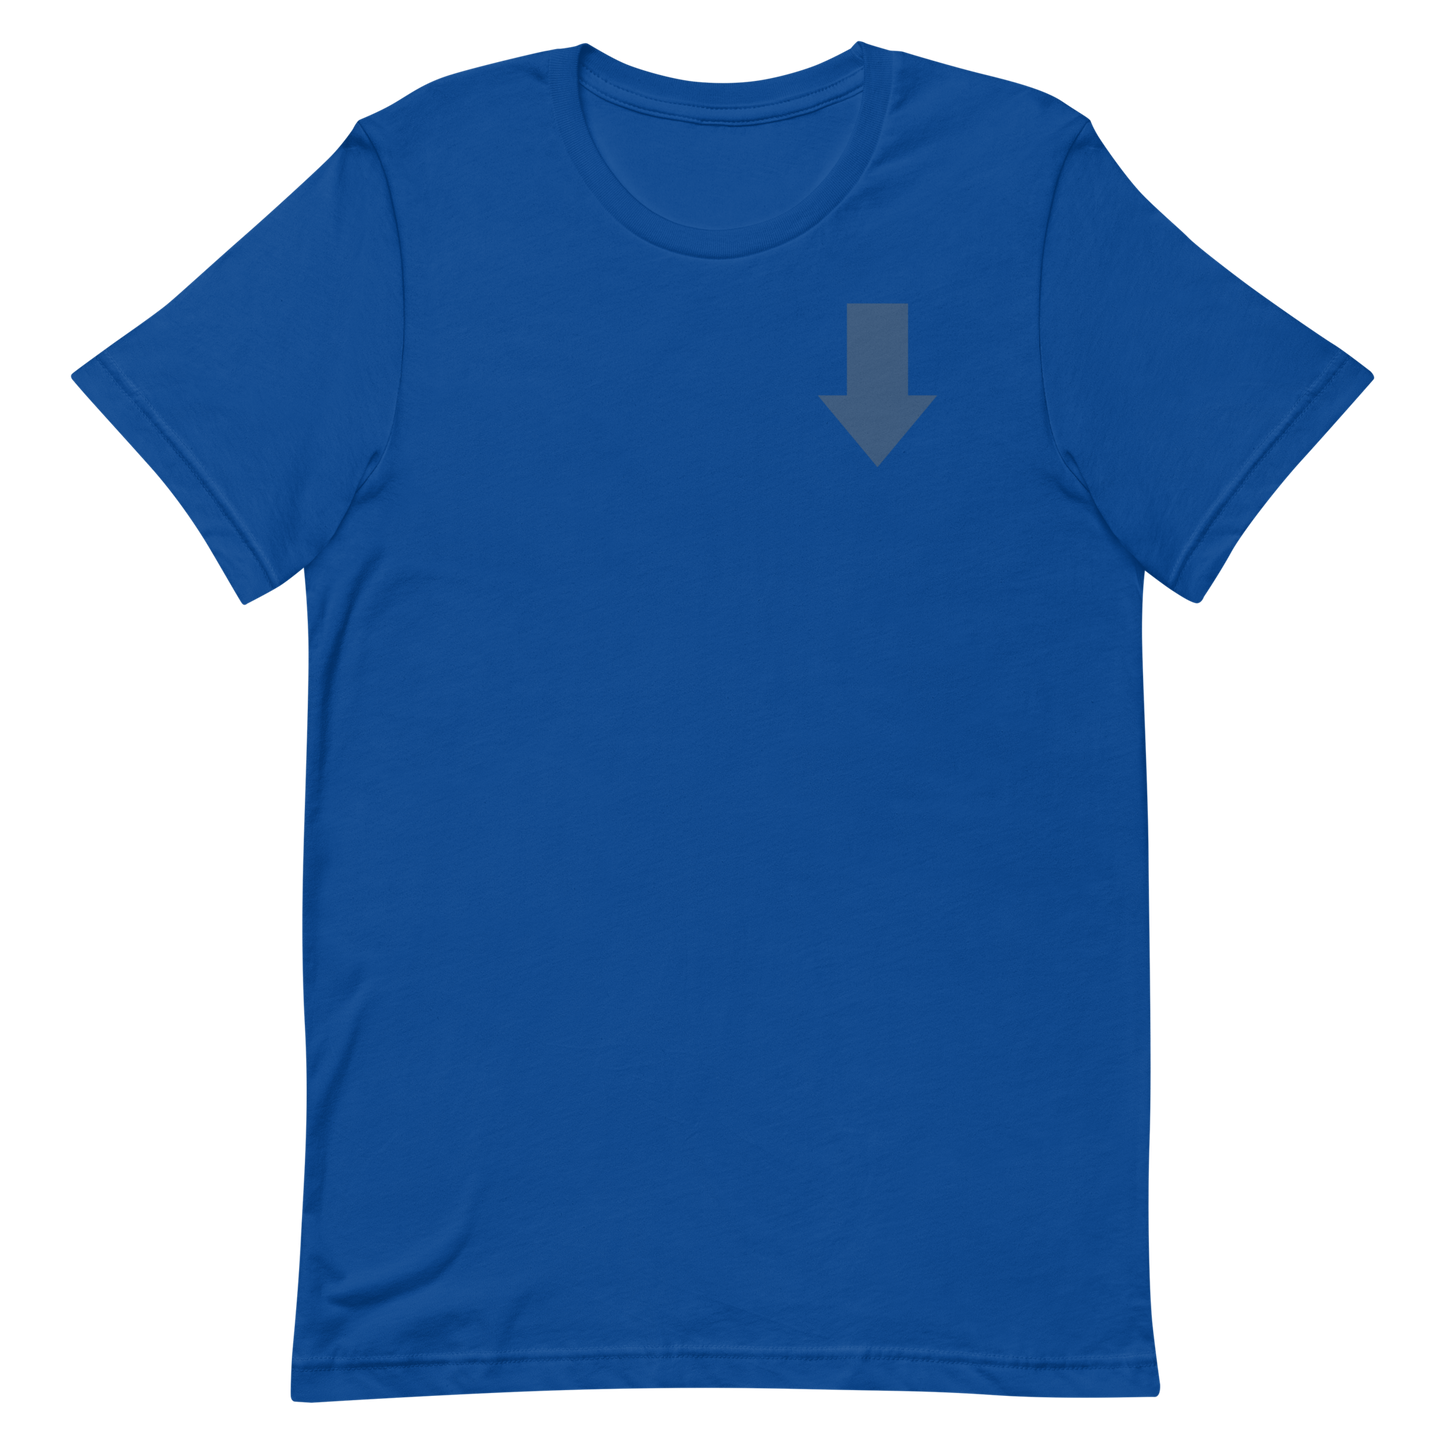 Clone T-shirt - Appo